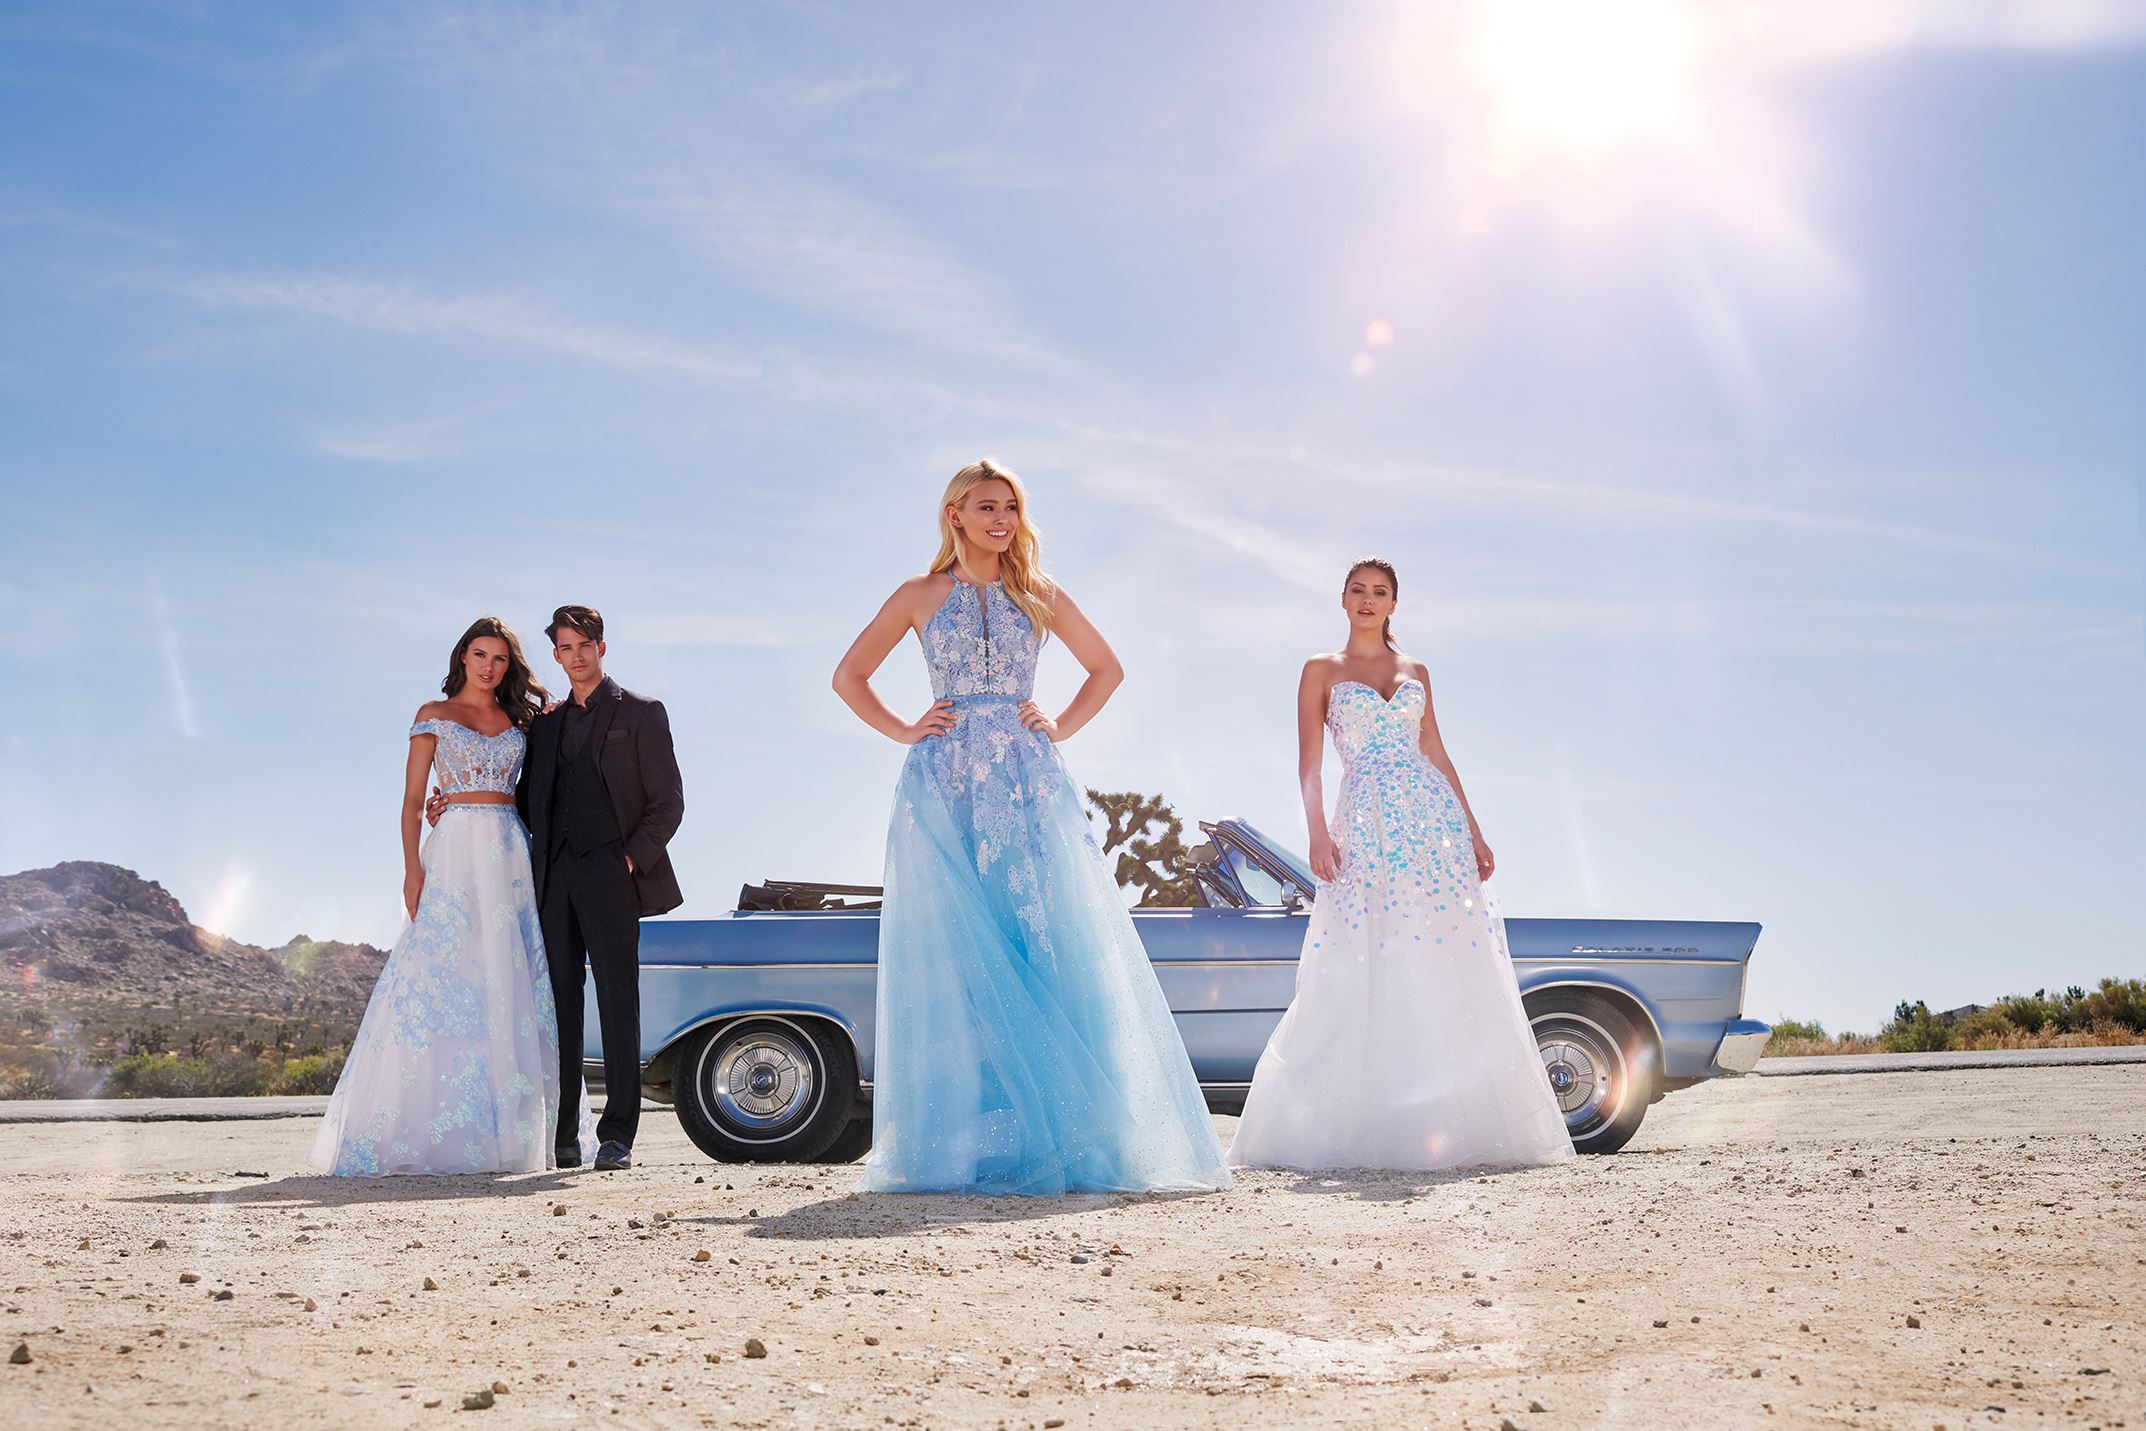 Models in Ellie Wilde dresses in front of a car in the desert